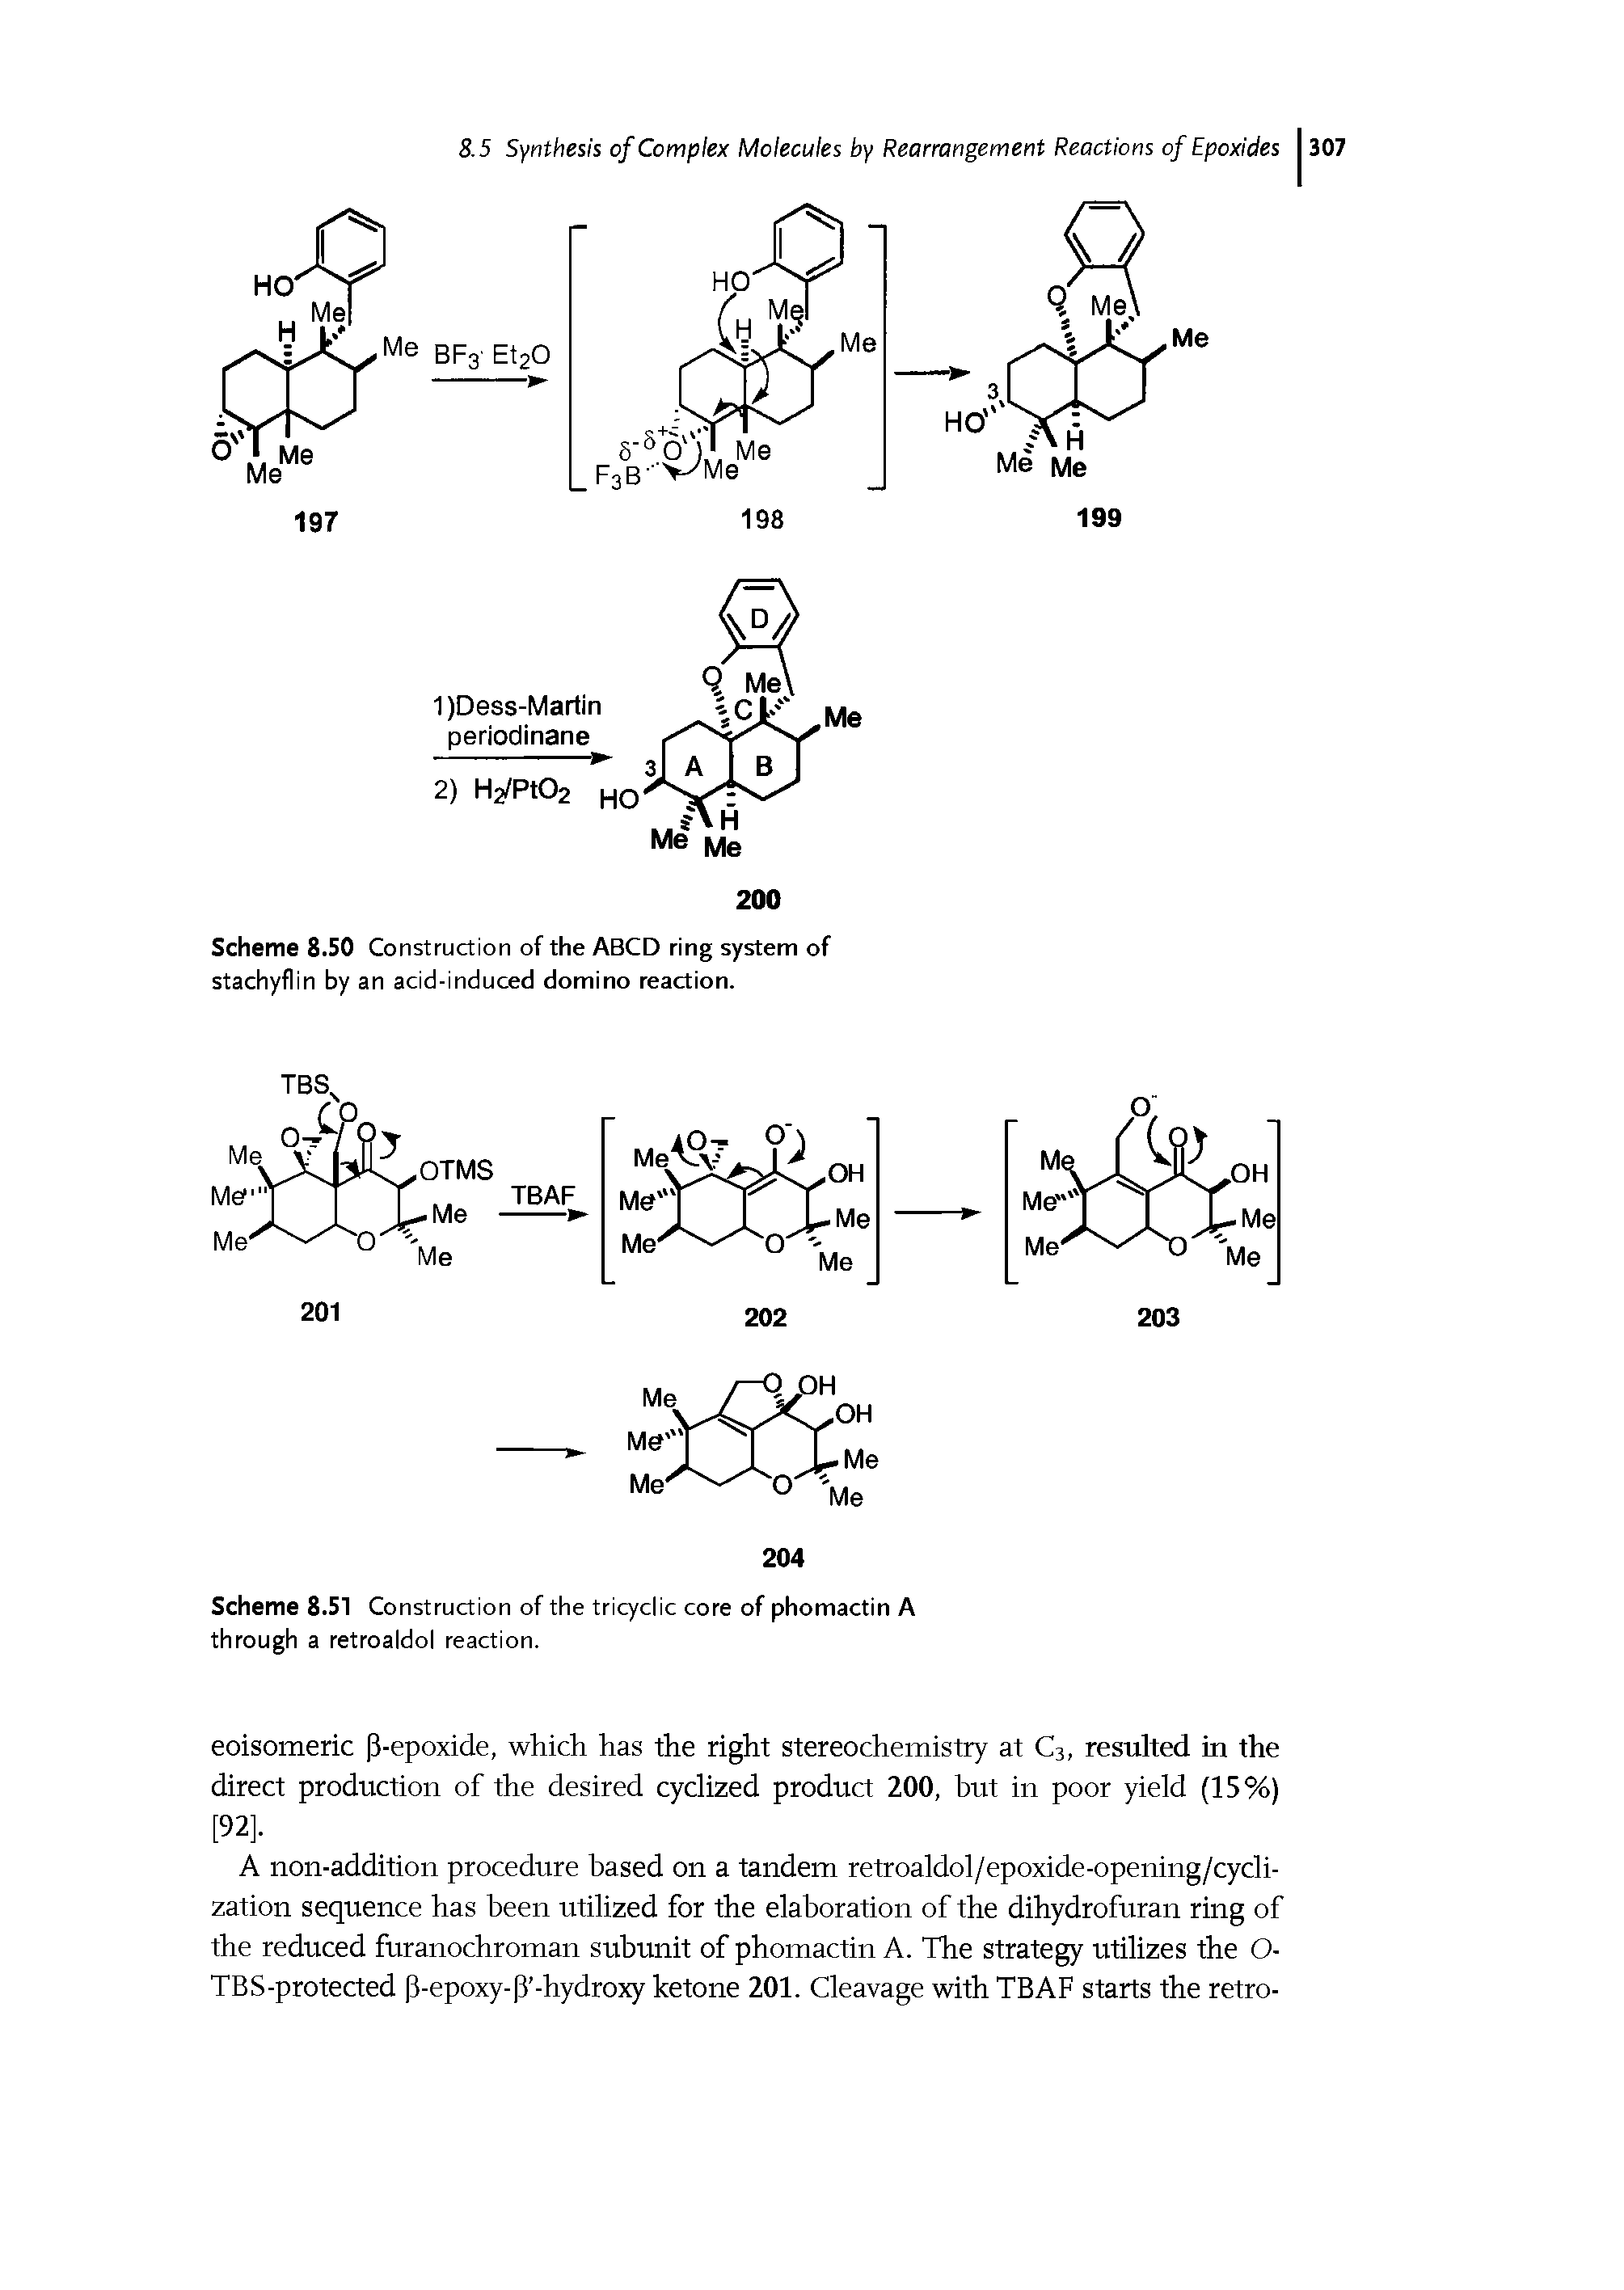 Scheme 8.51 Construction of the tricyclic core of phomactin A through a retroaldol reaction.